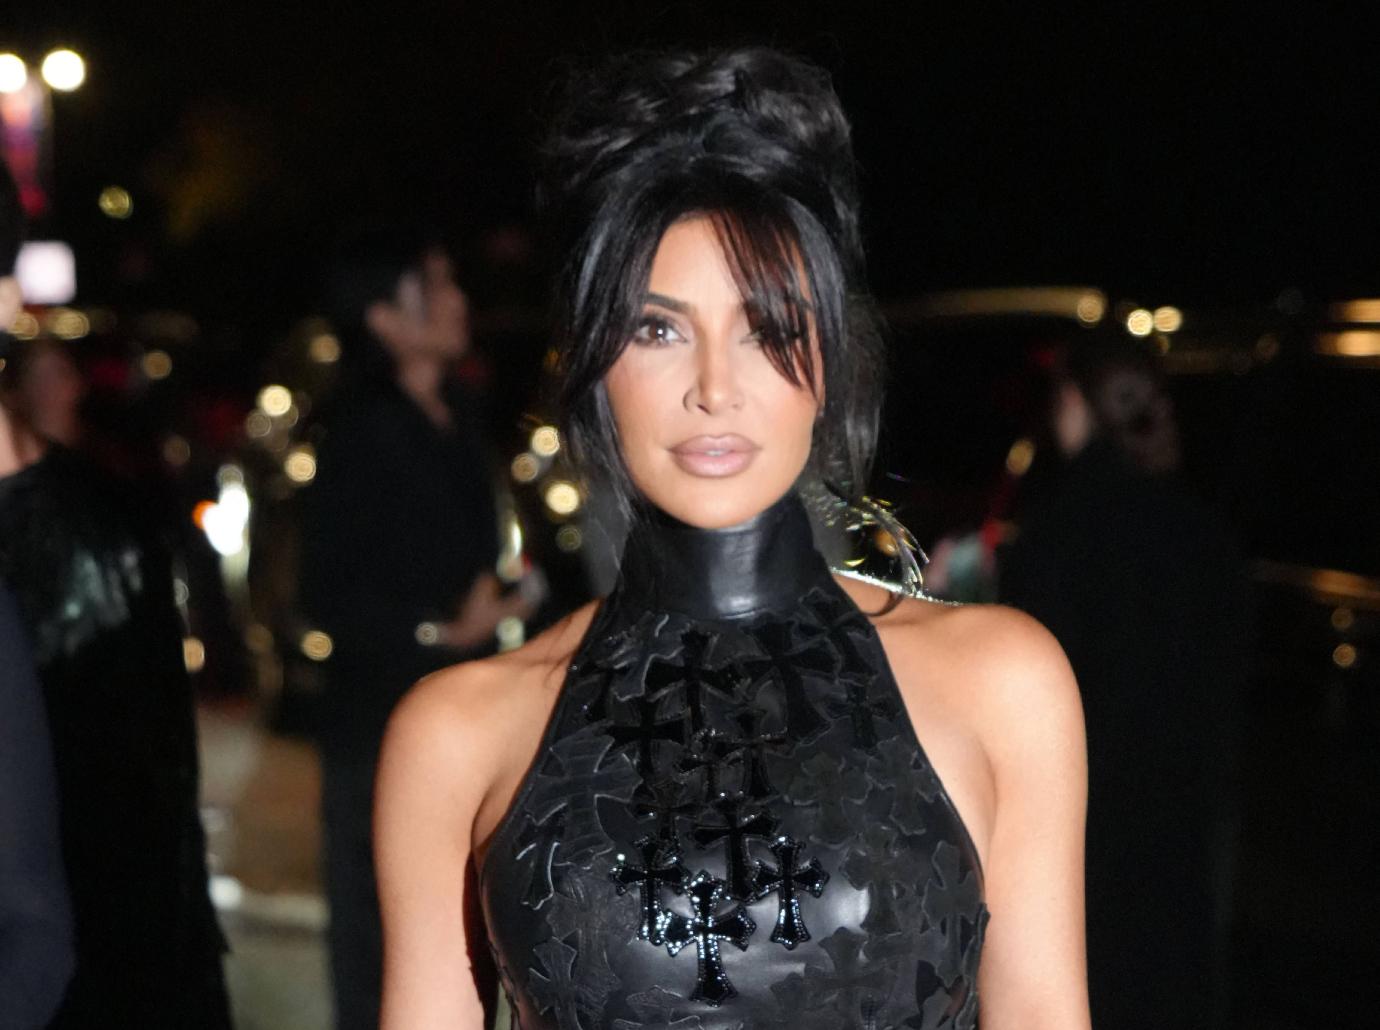 PHOTOS: Peek A Boob! Kim Kardashian's Boobs Almost Spill Out In Cleavage  Baring Dress